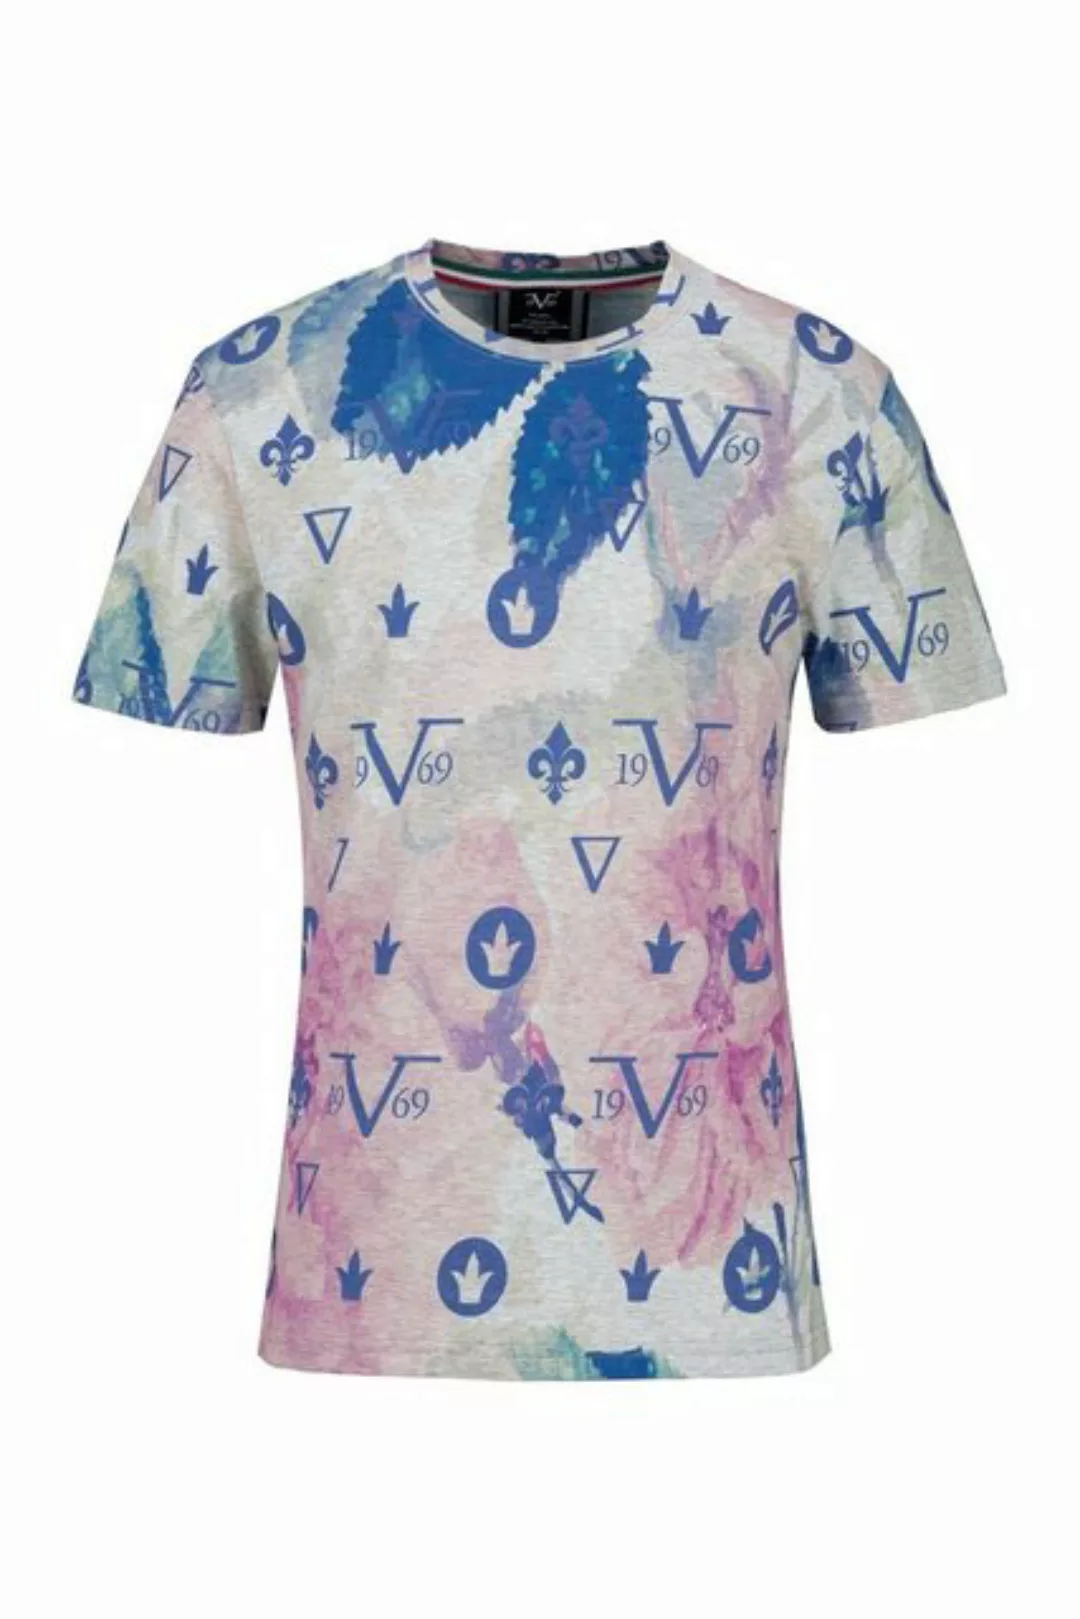 19V69 Italia by Versace T-Shirt by Versace Sportivo SRL - Enno günstig online kaufen